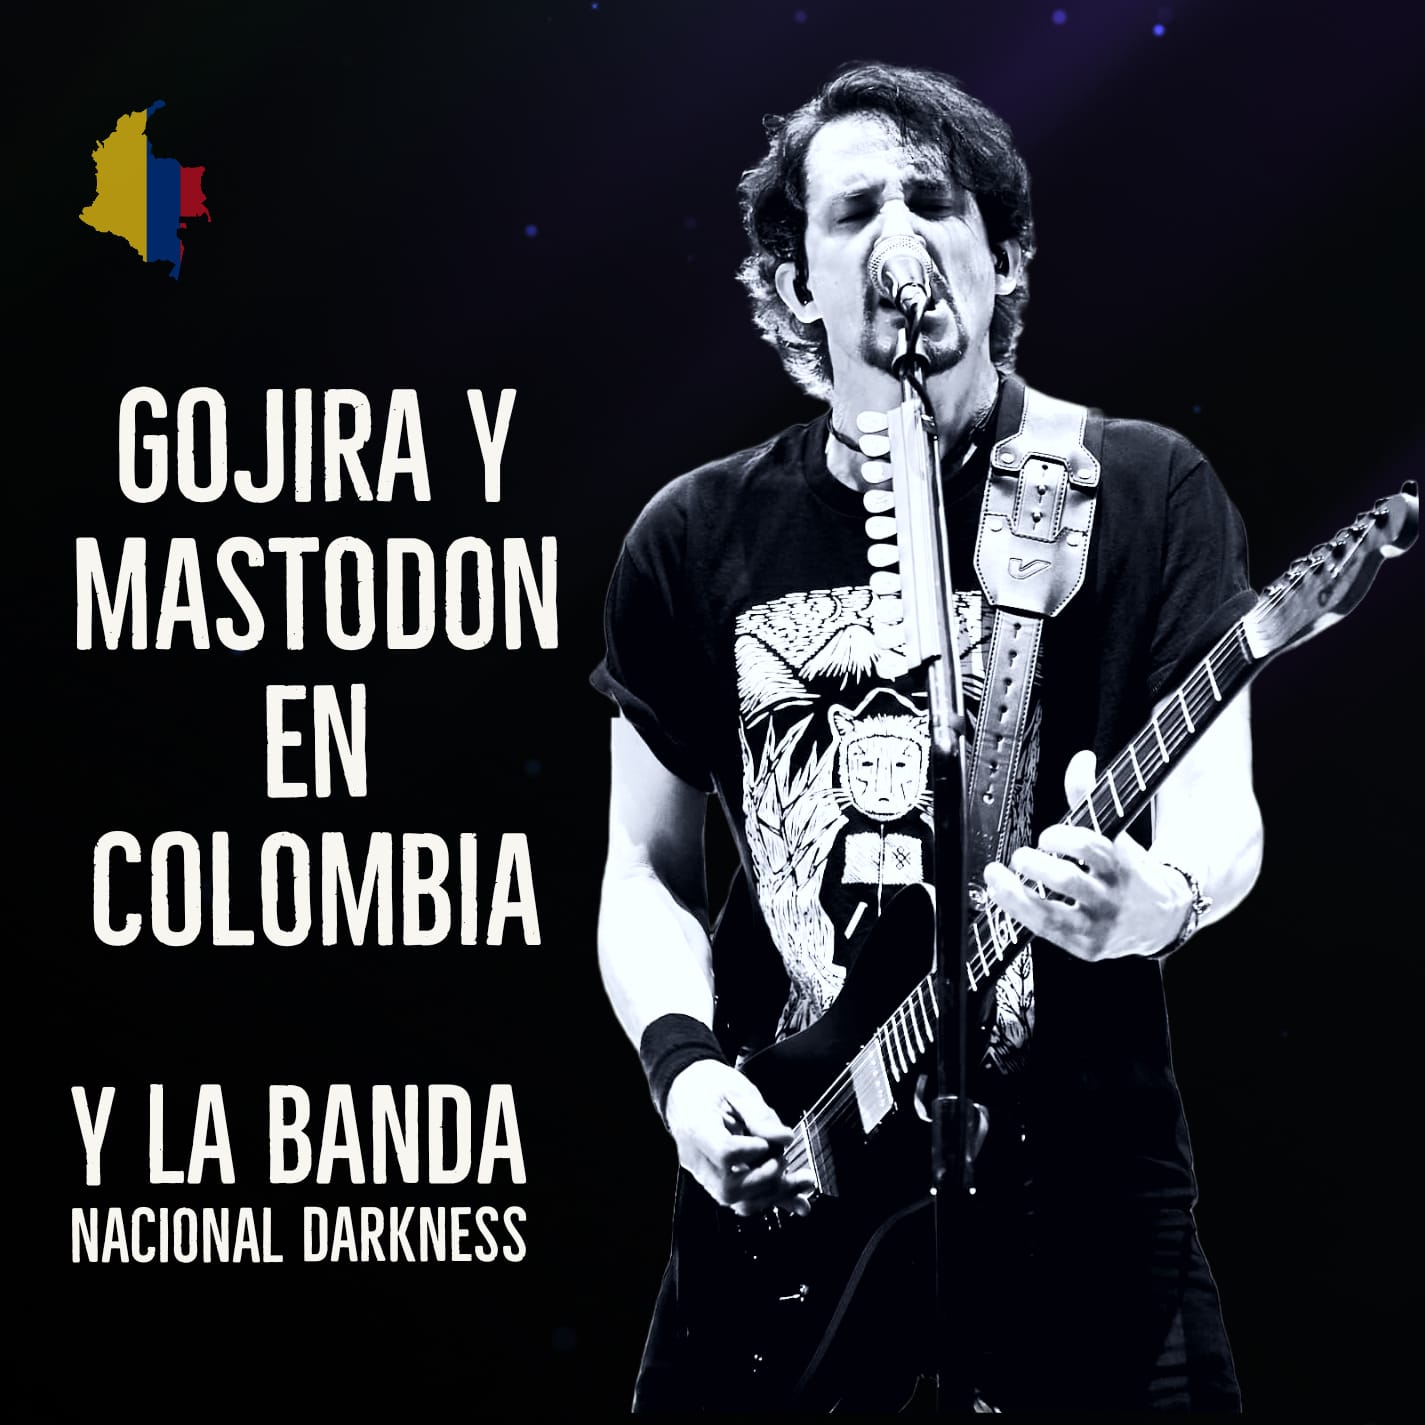 Gojira y Mastodone Concierto Bogotá Nota Rockear